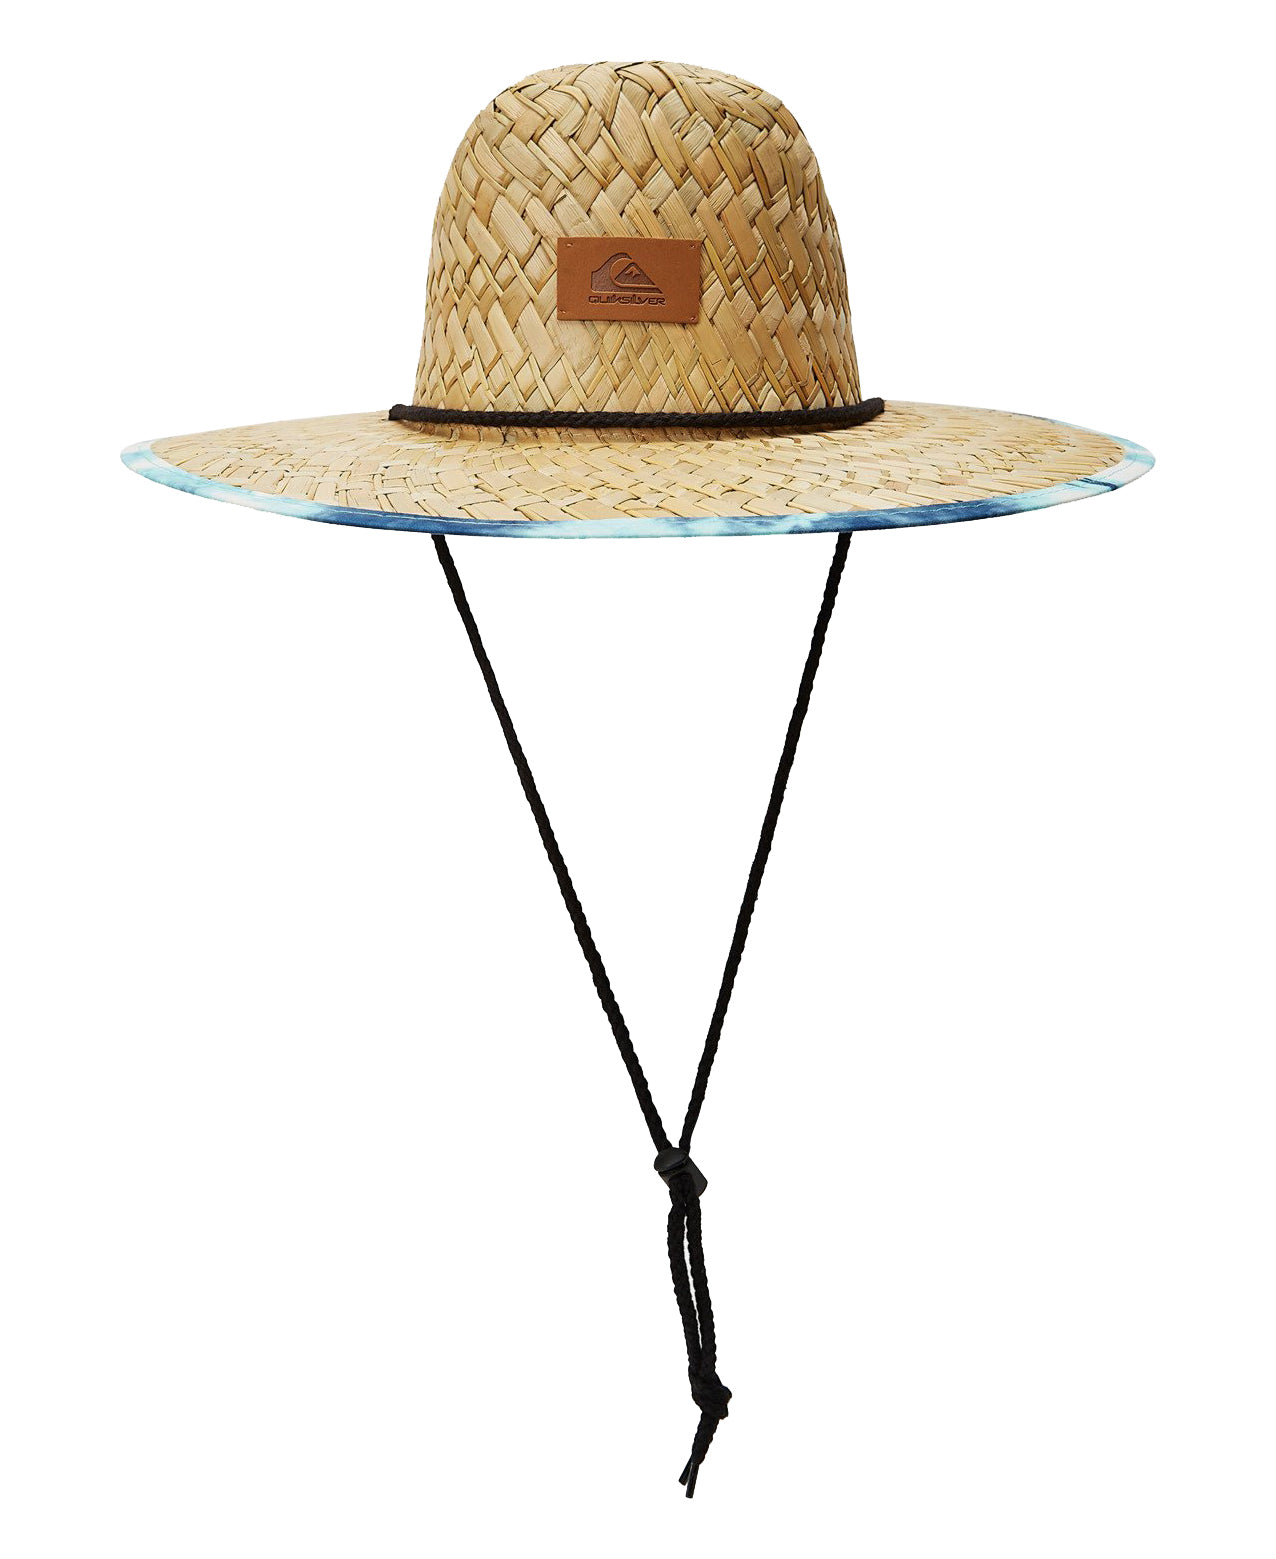 Quiksilver Outsider Straw Lifeguard Hat BSN0 L/XL